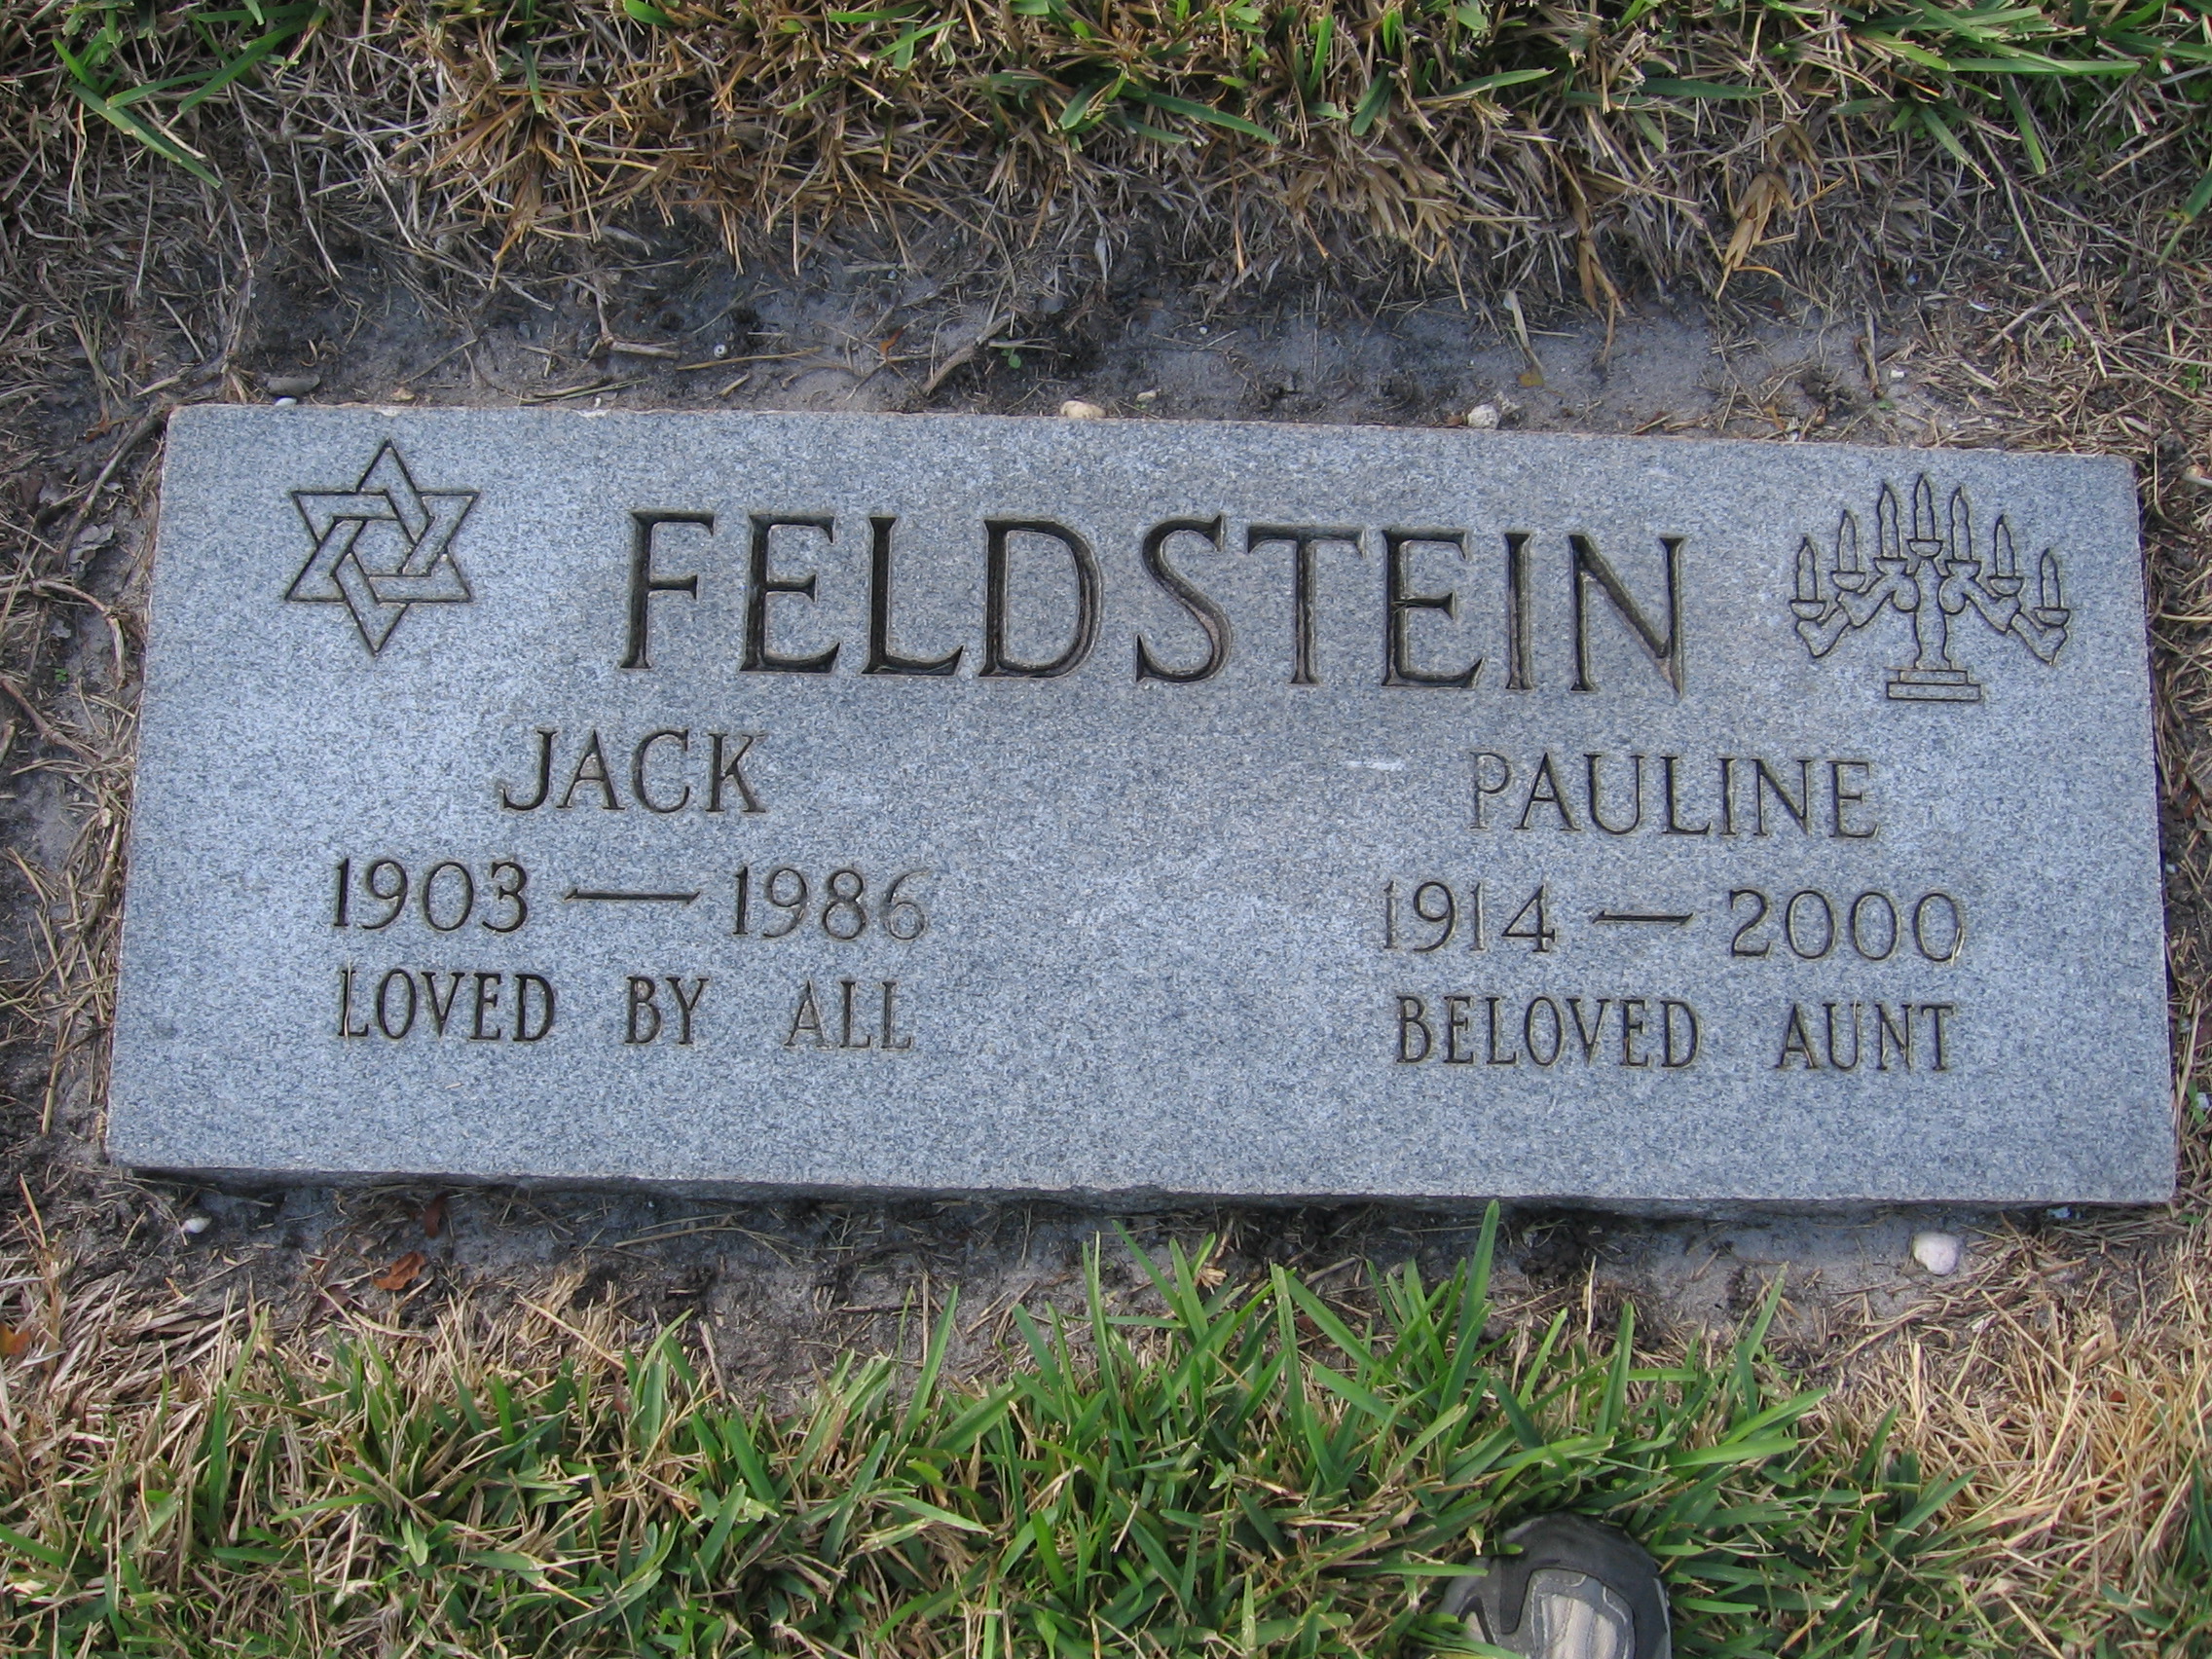 Pauline Feldstein